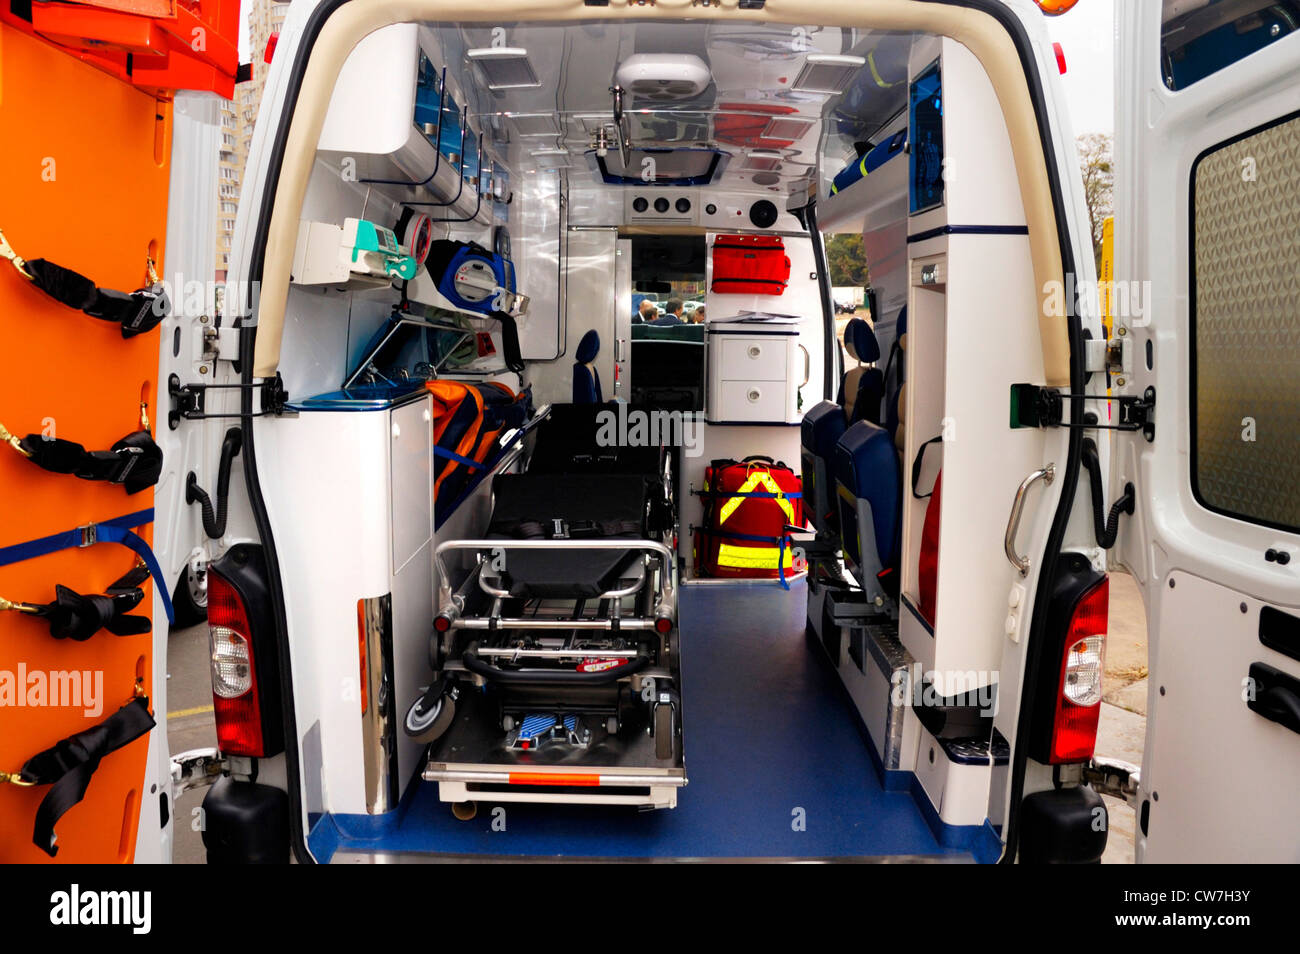 Ambulance Vehicle Equipment Stock Photo